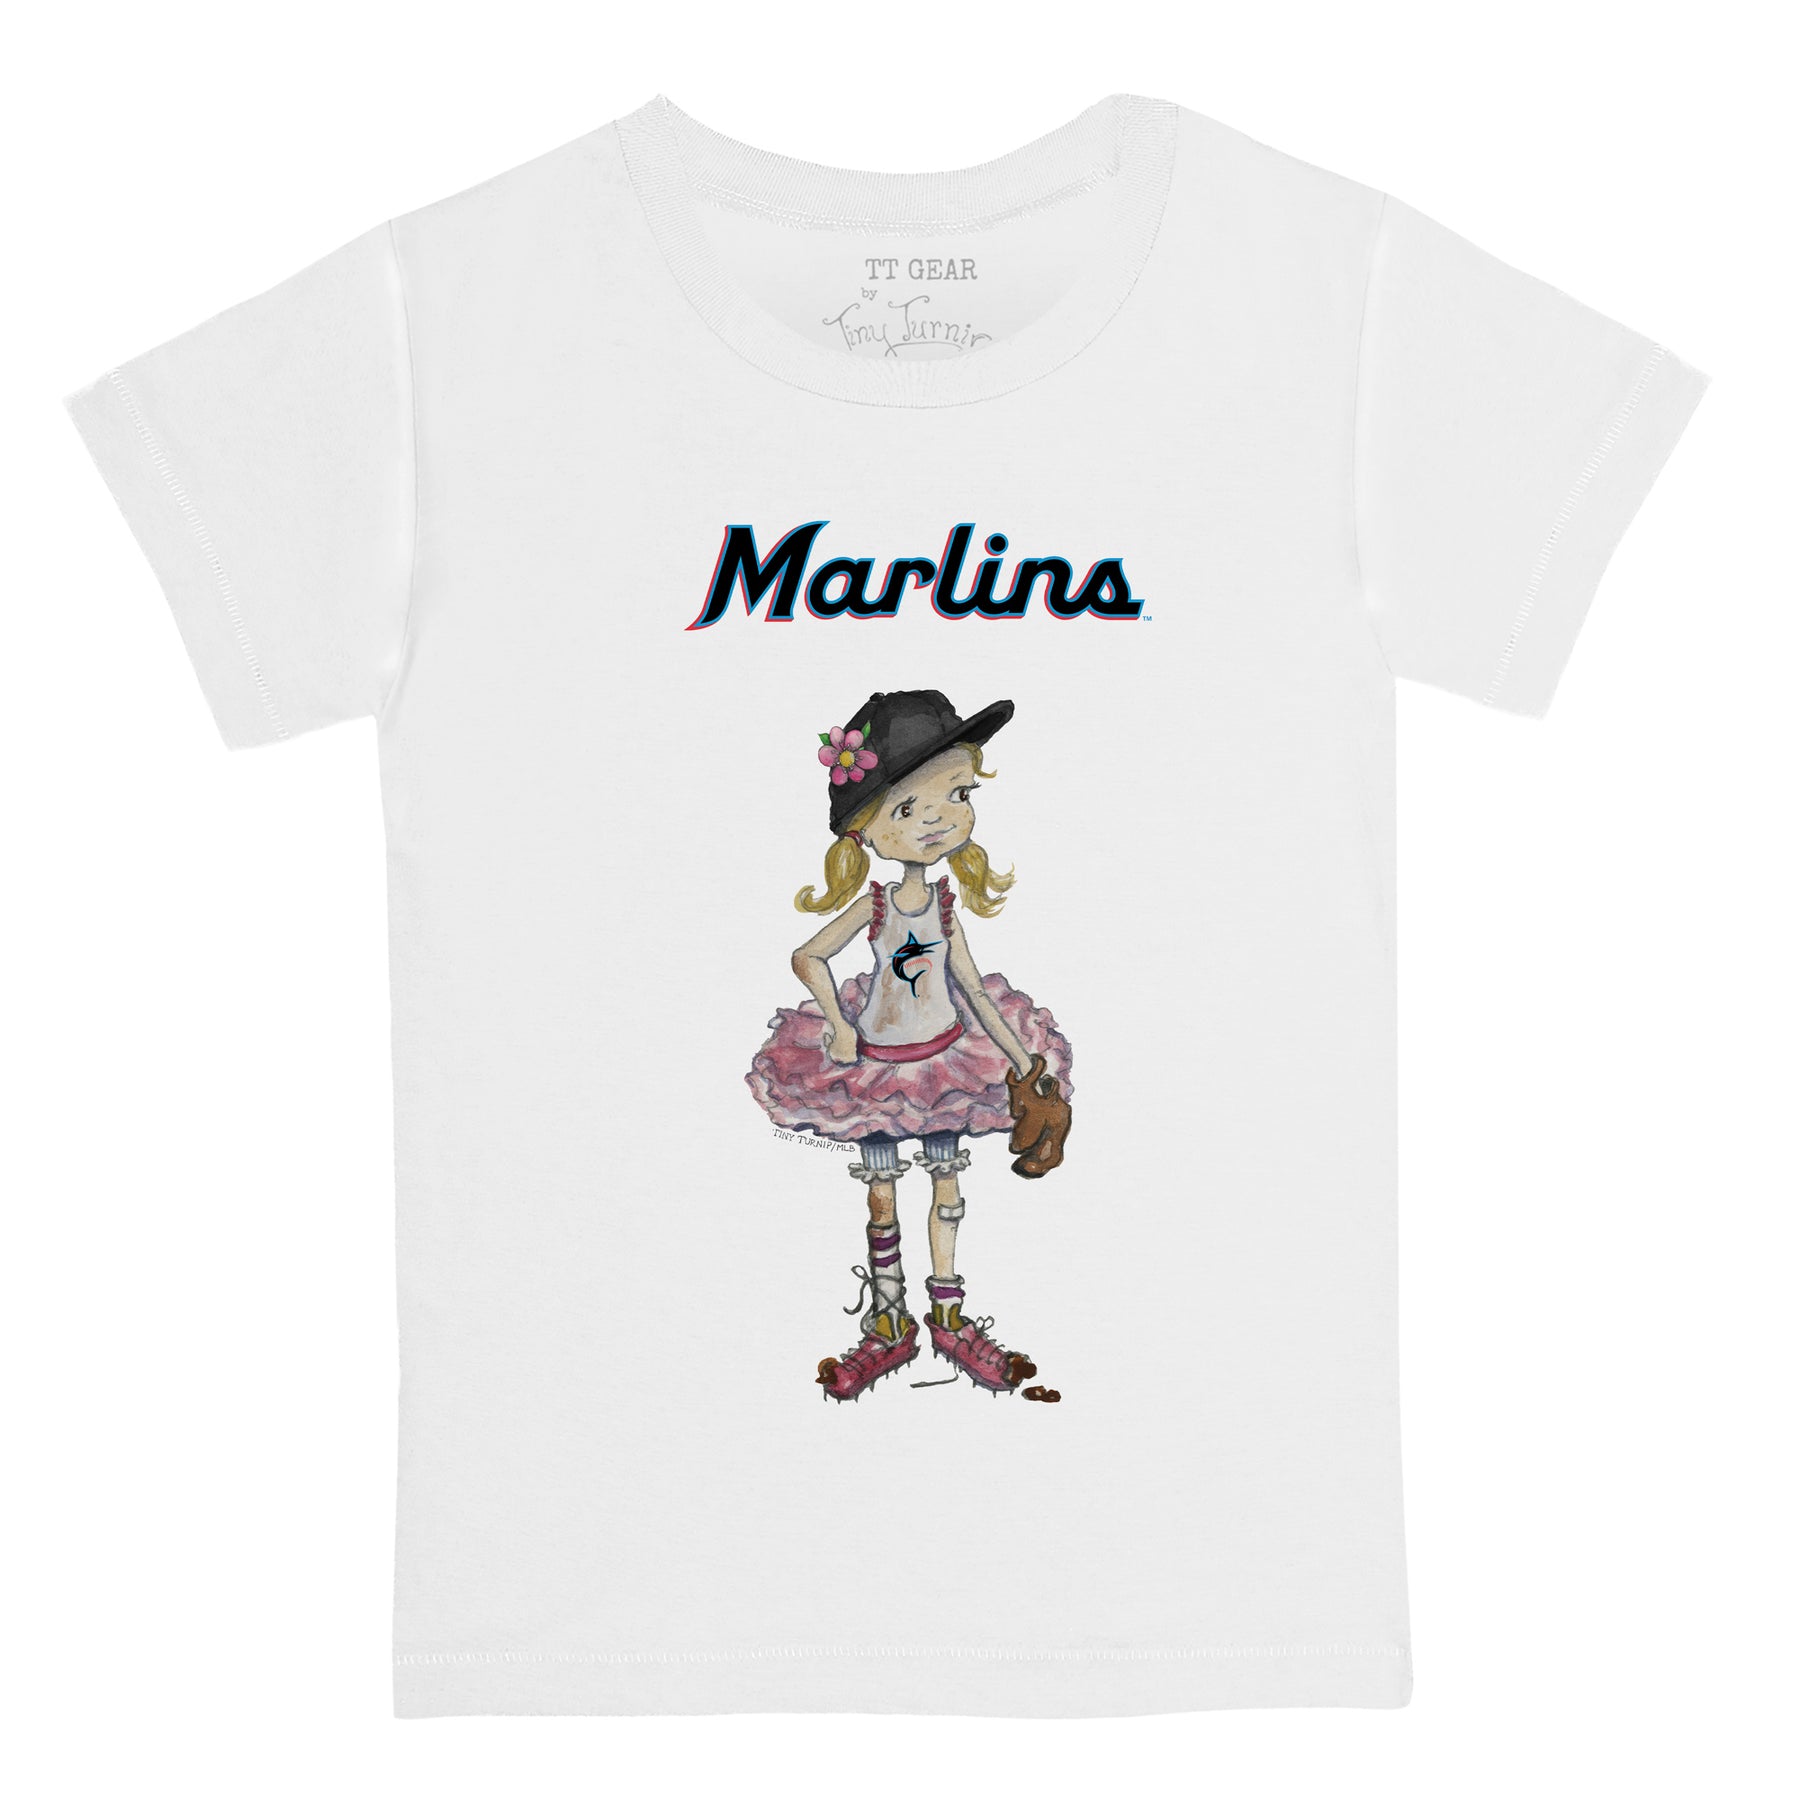  Miami Marlins Youth Evolution Color T-Shirt (Medium